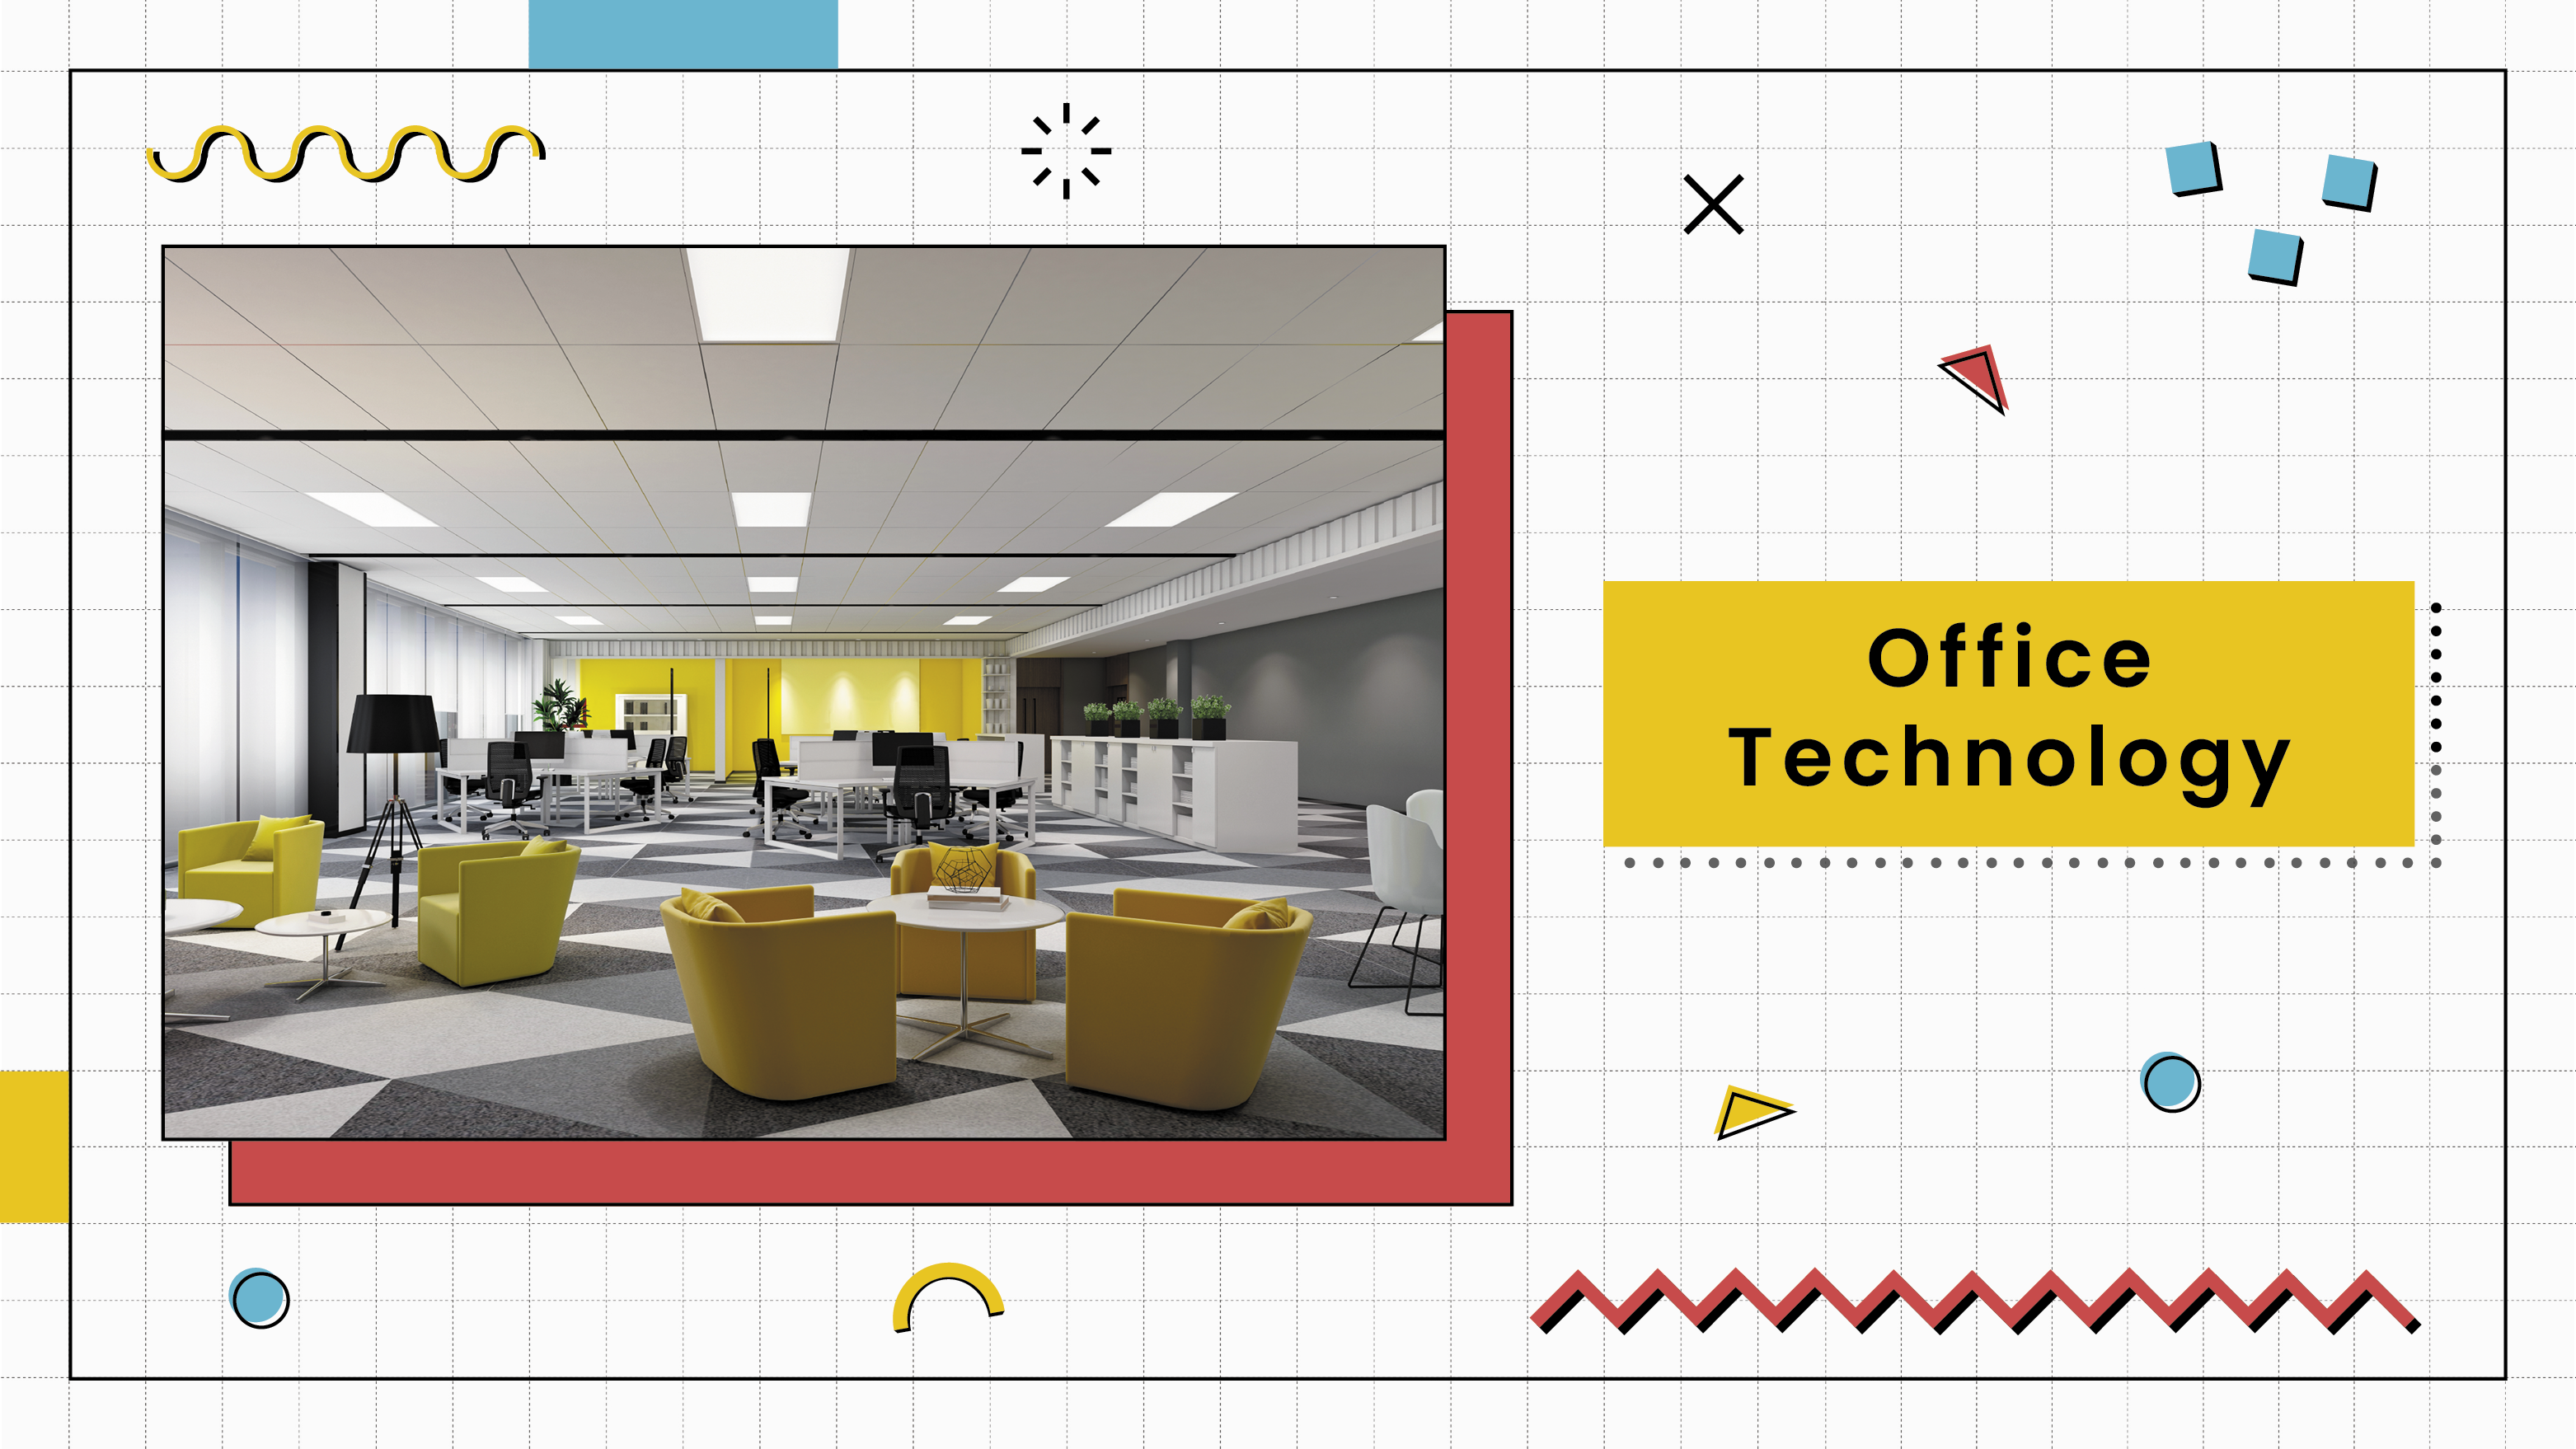 [C] Office Technology